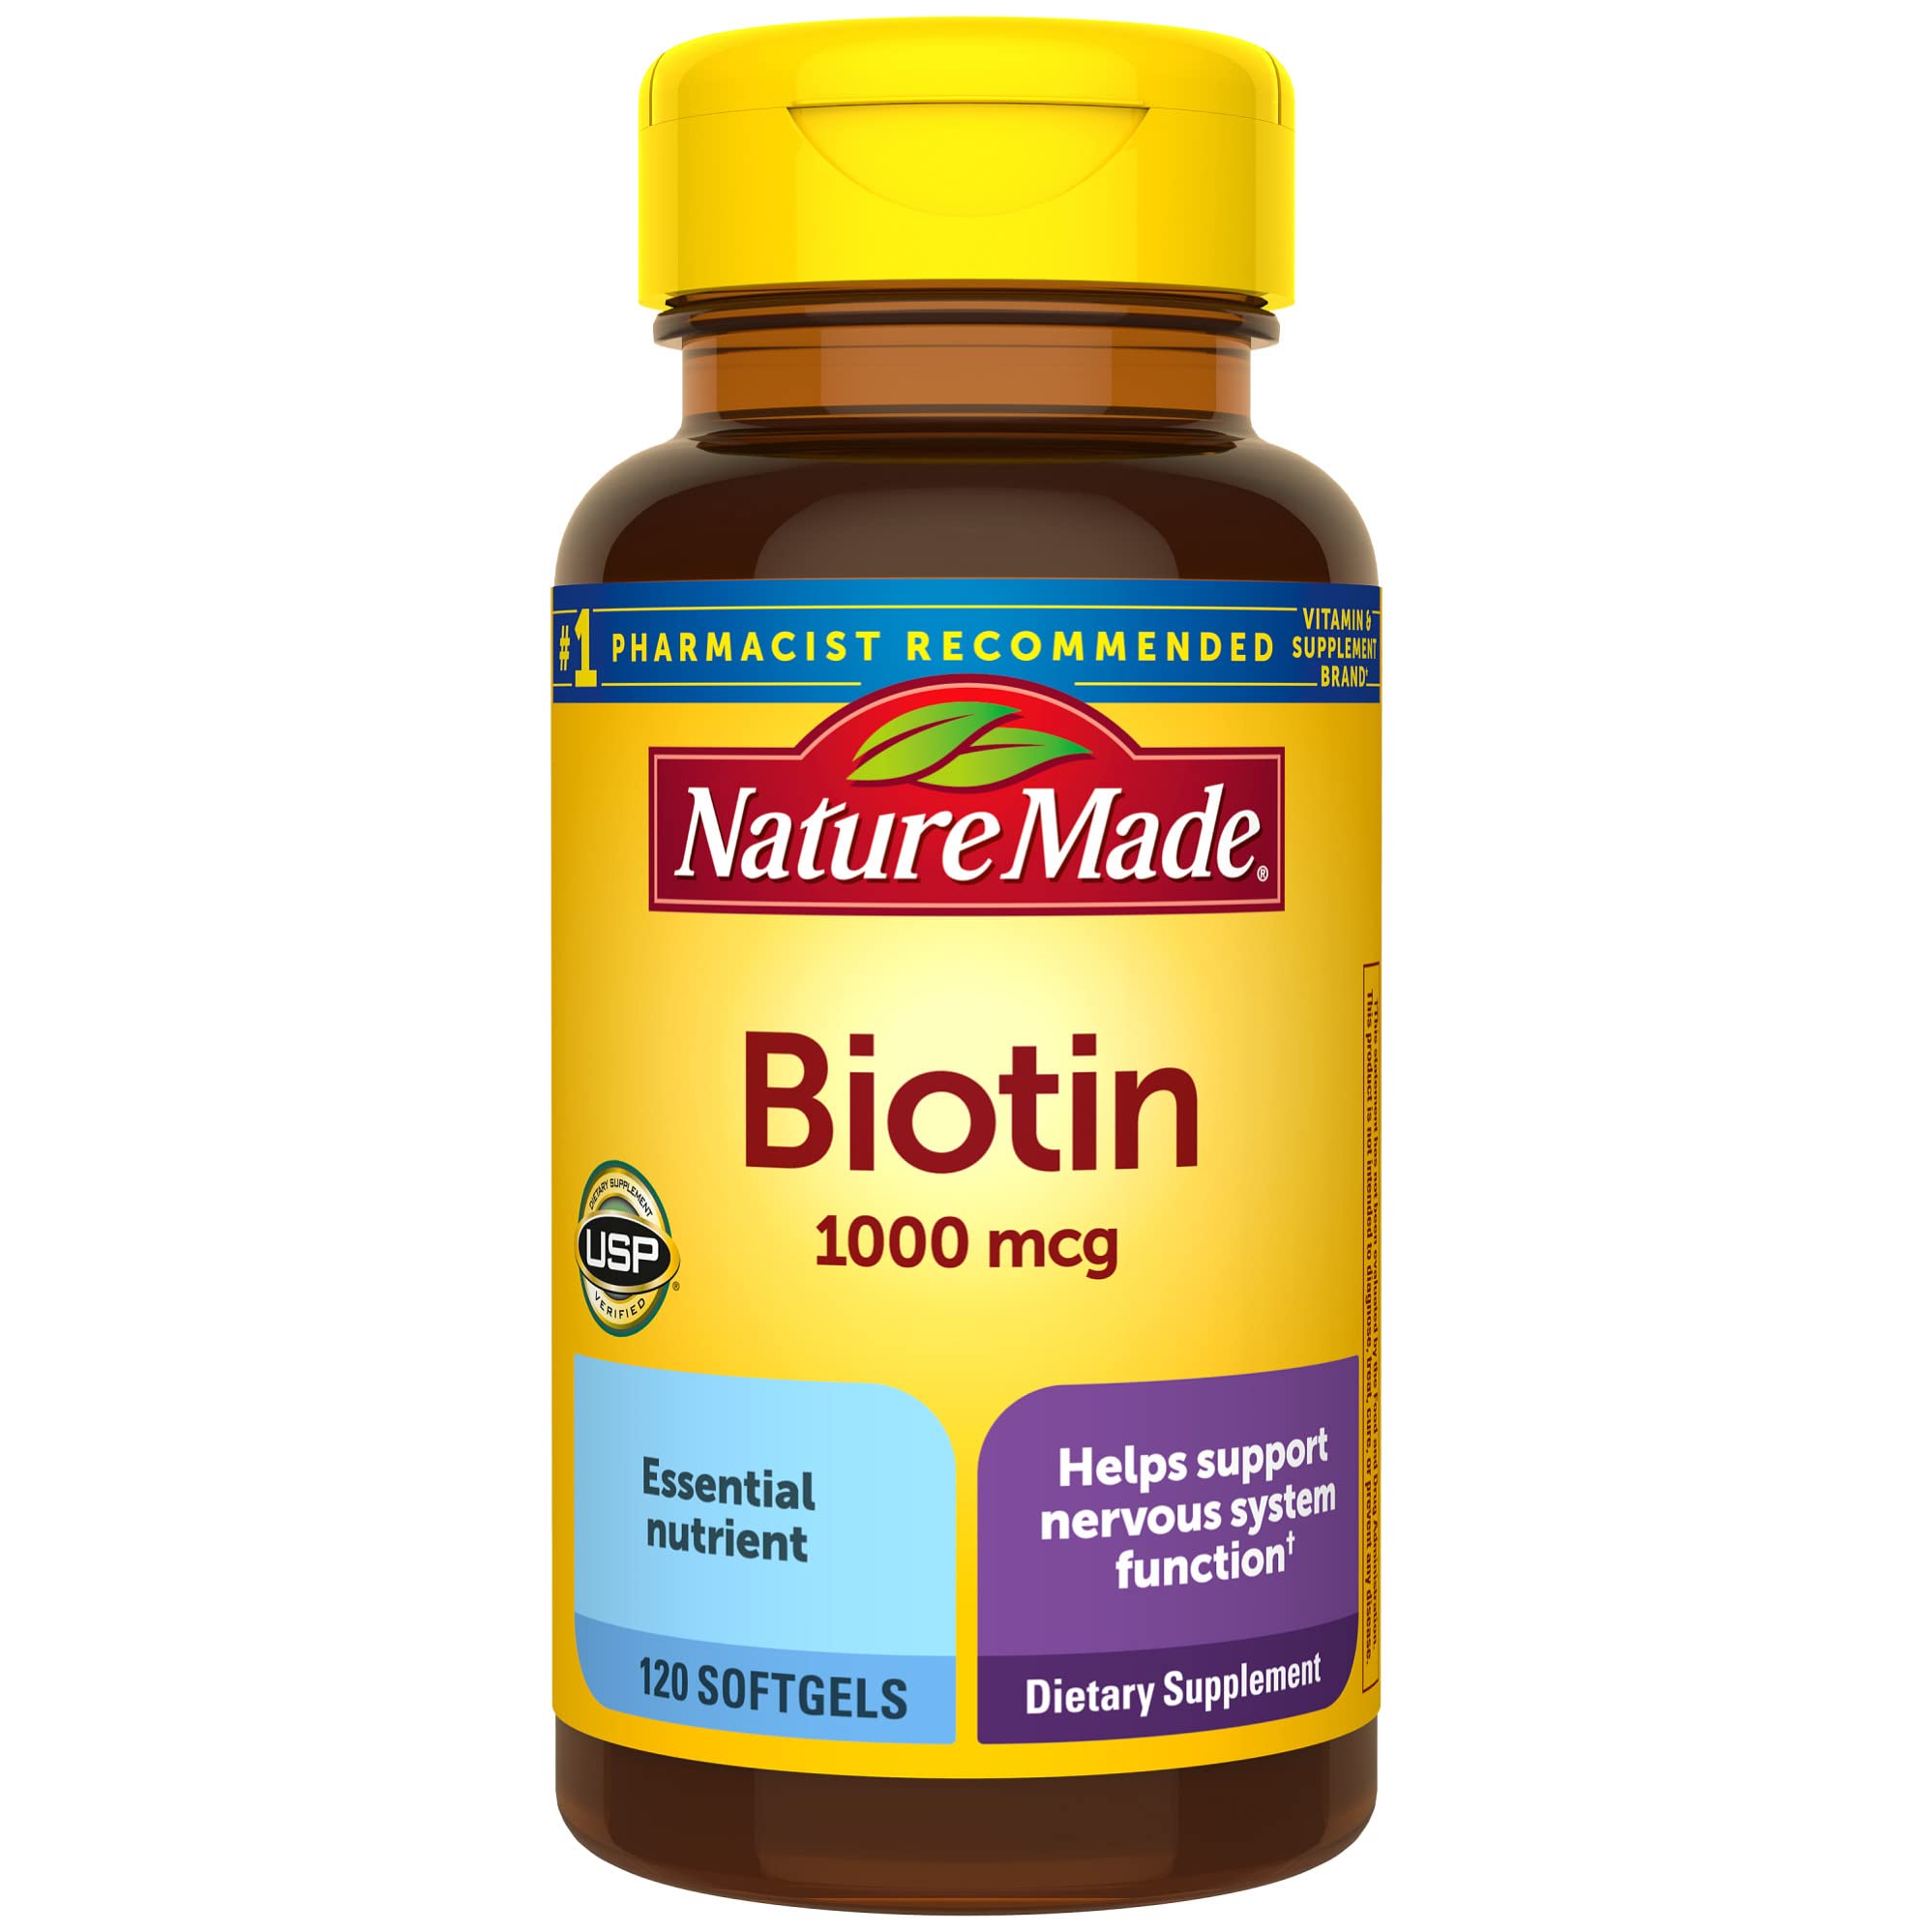 Nature Made Biotin 1000 mcg Dietary Supplement - 120 Softgels